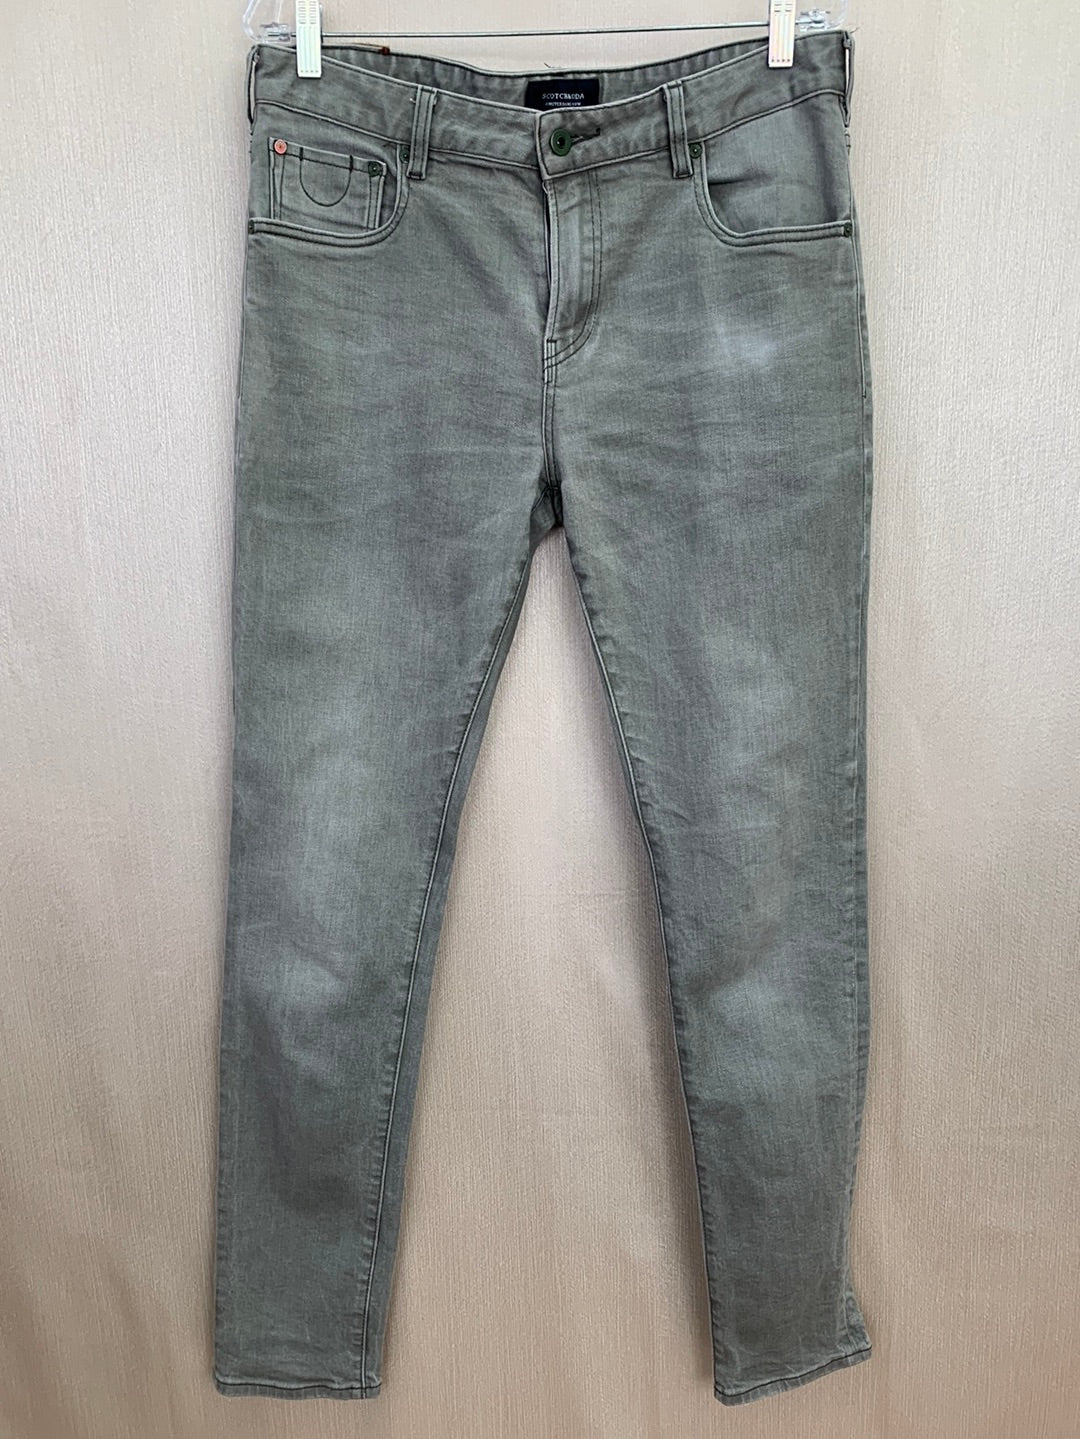 SCOTCH & SODA olive green Skim Slim Fit Garment-Dyed Jeans - W34 L34